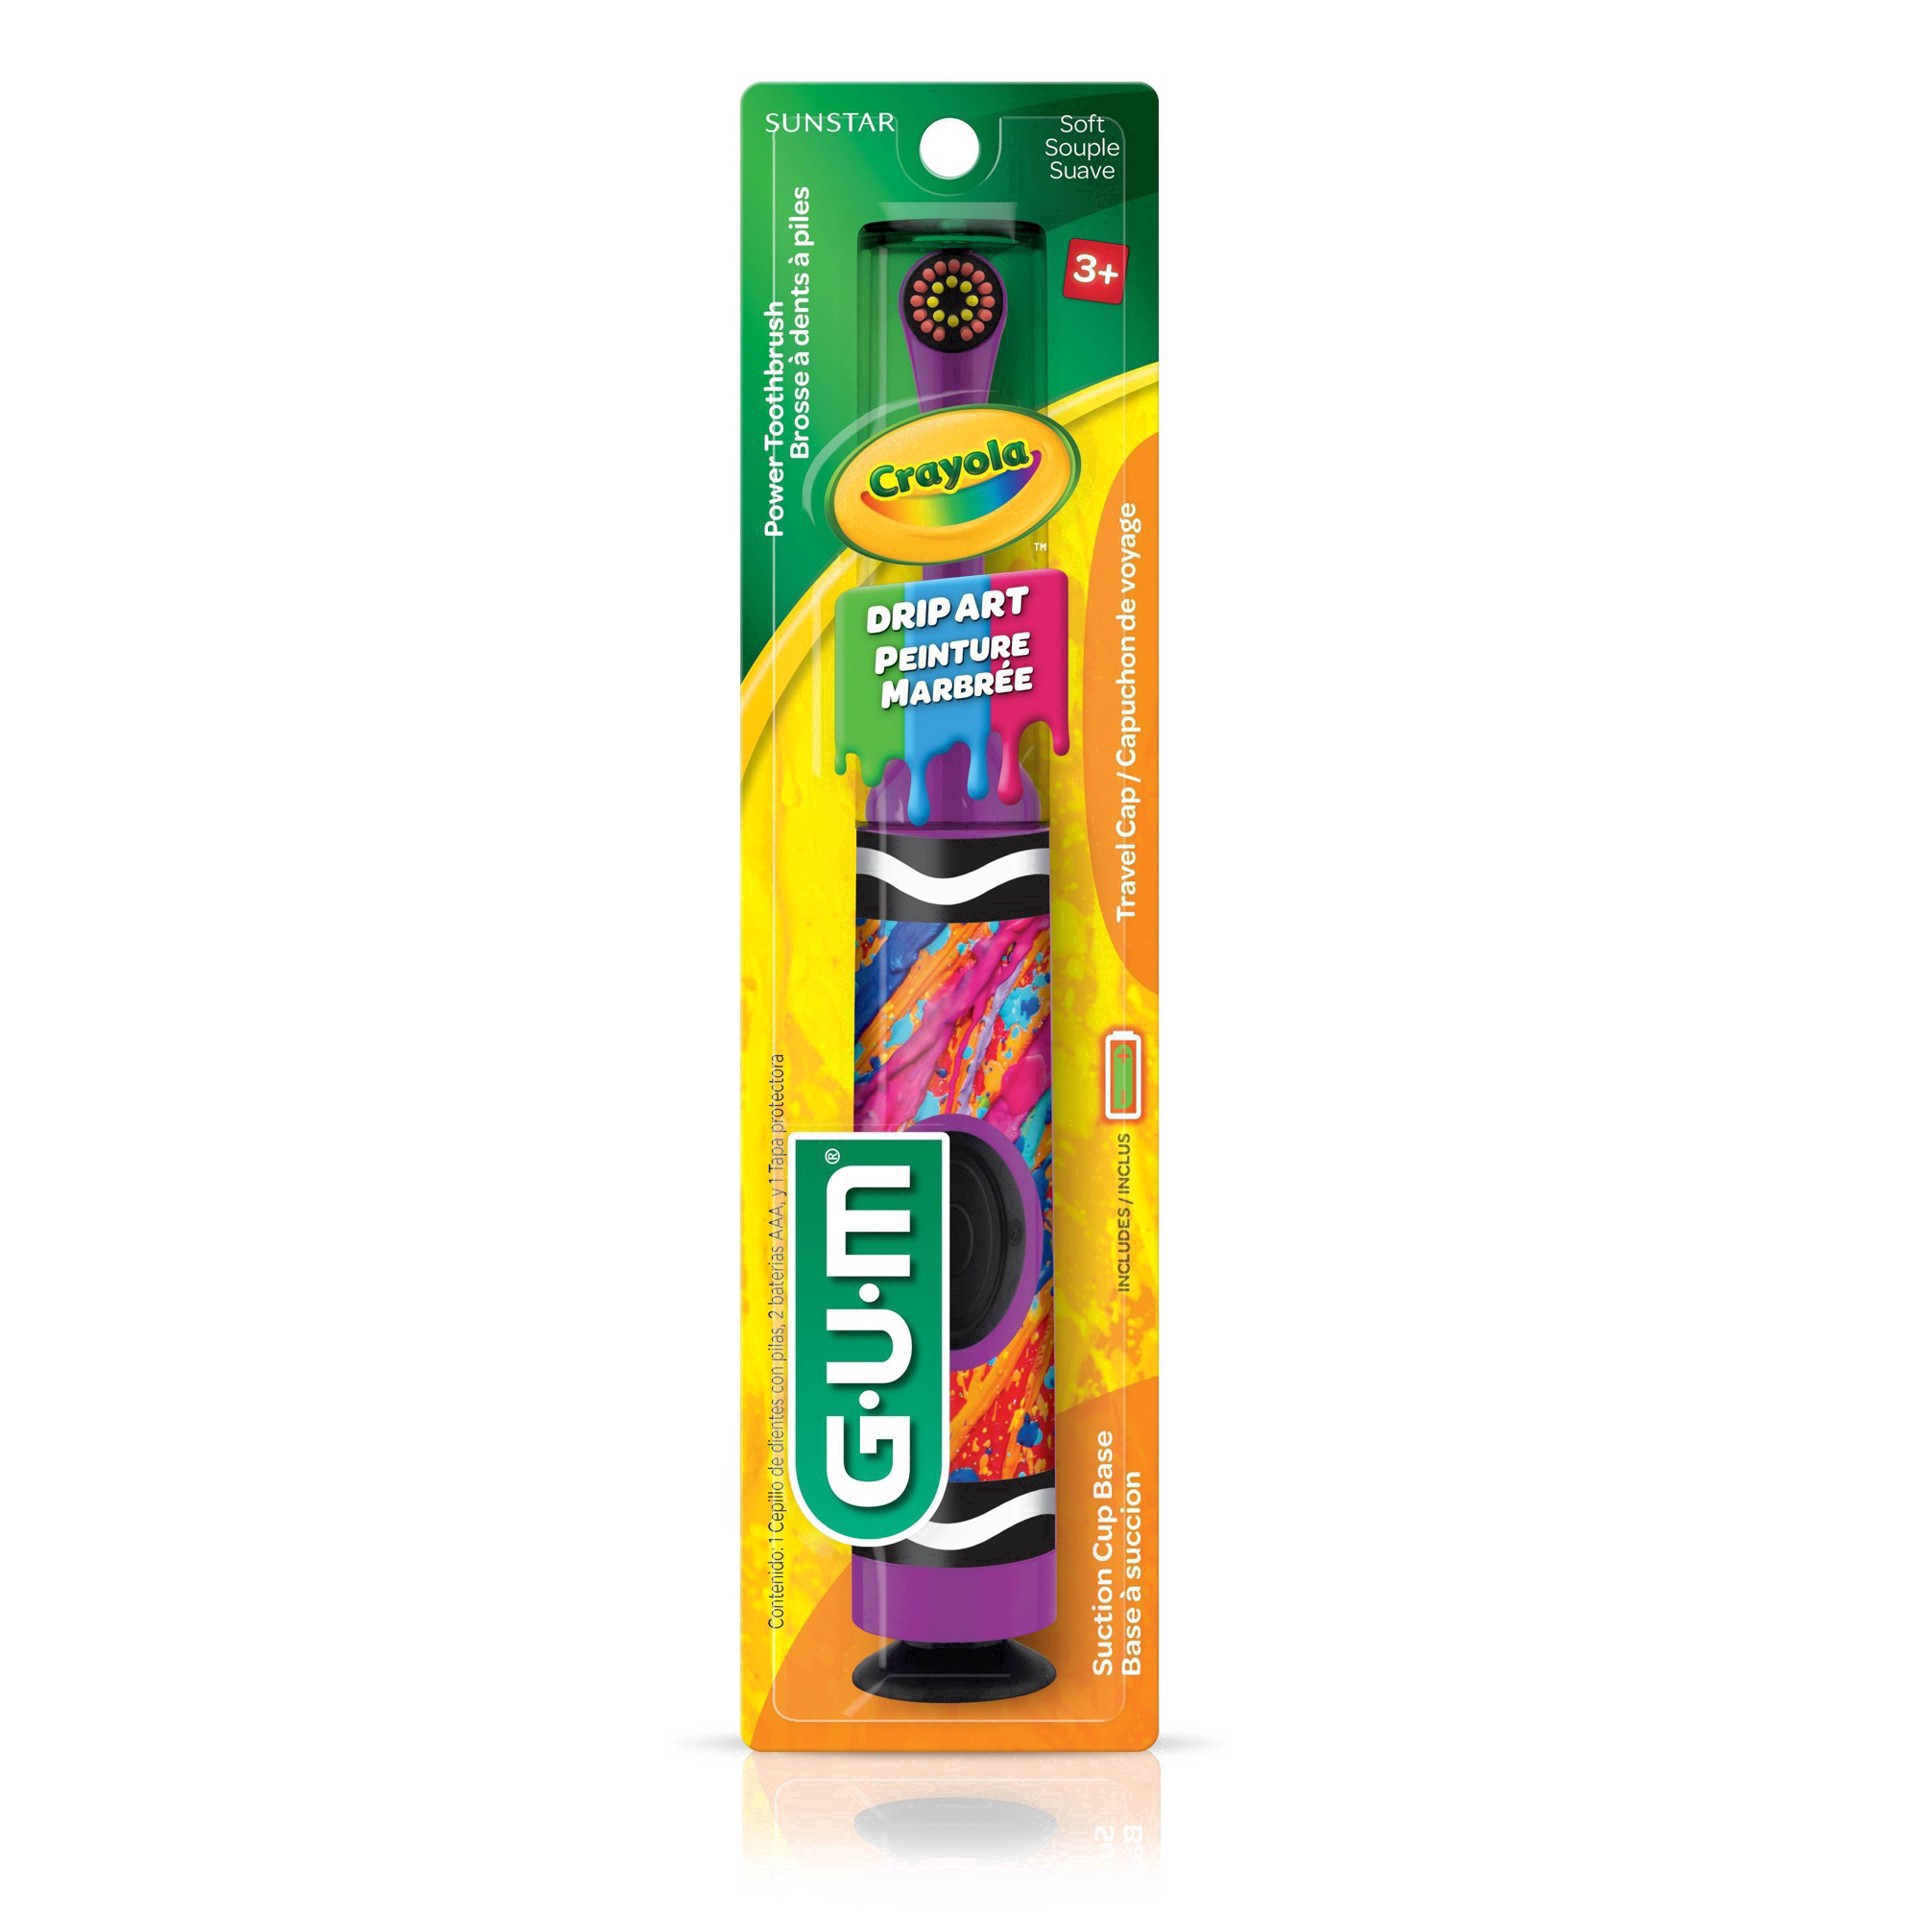 slide 22 of 50, G-U-M Crayola Electric Toothbrush, 1 ct